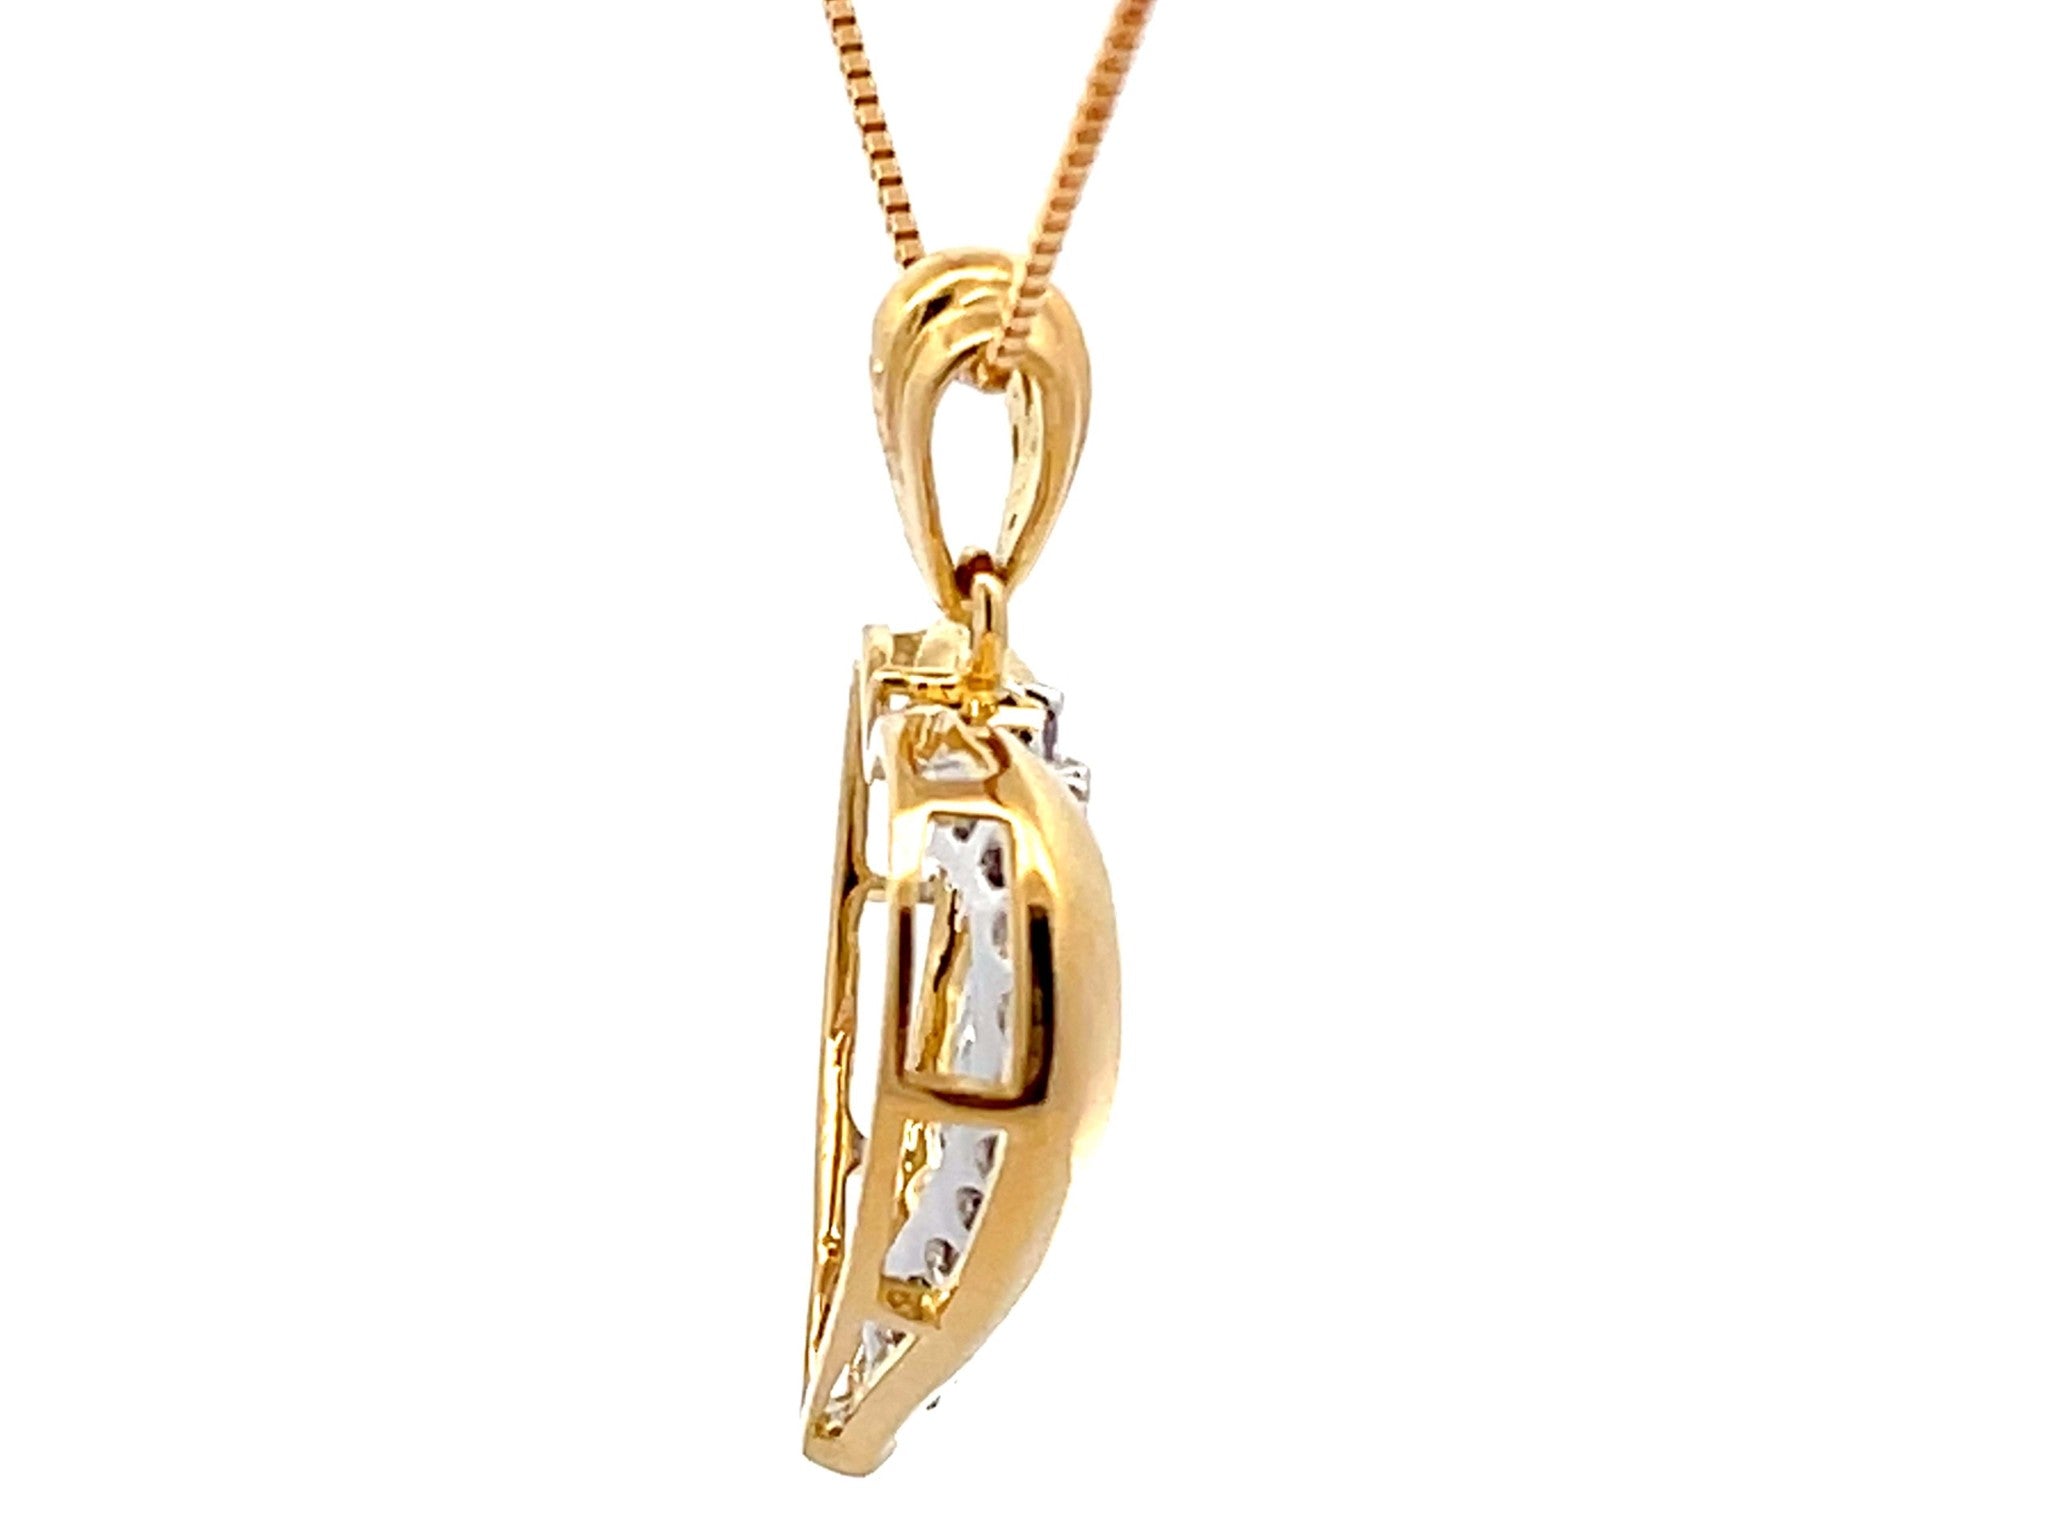 Diamond Heart Necklace 18k Yellow Gold